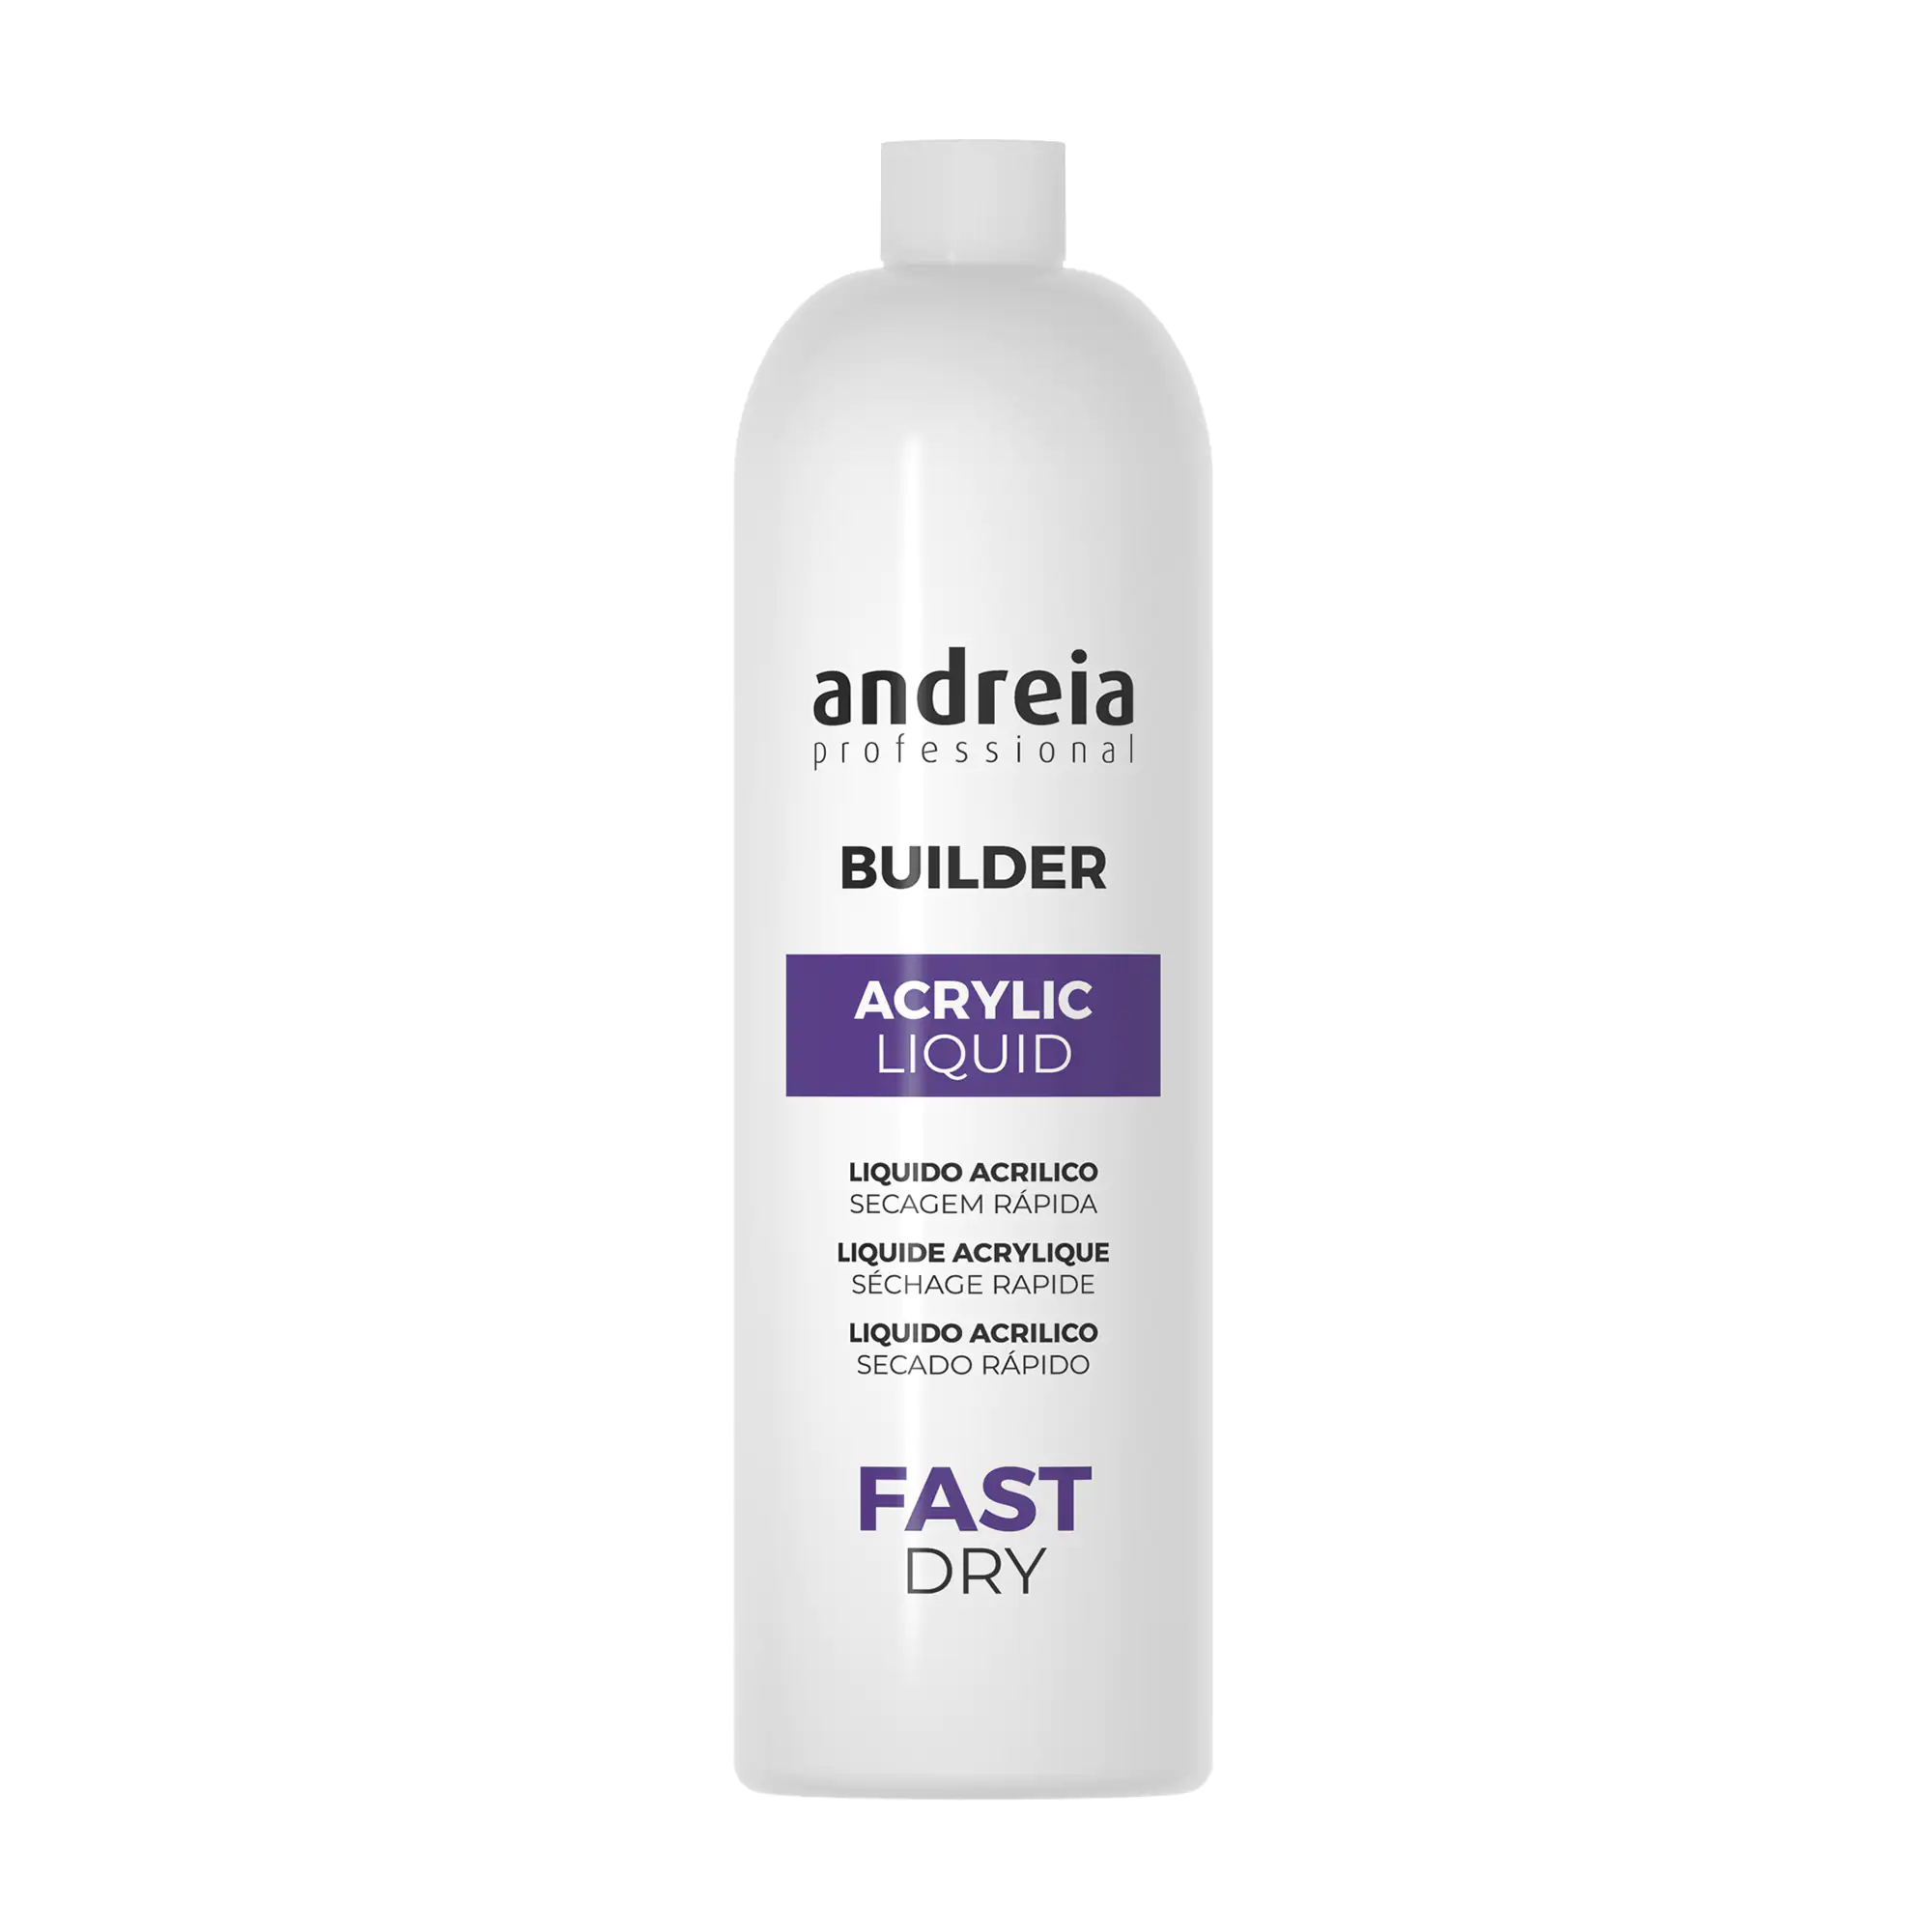 Andreia Ακρυλικό Υγρό Fast Dry 1000ml | Femme Fatale - Femme Fatale - Andreia Ακρυλικό Υγρό Fast Dry 1000ml